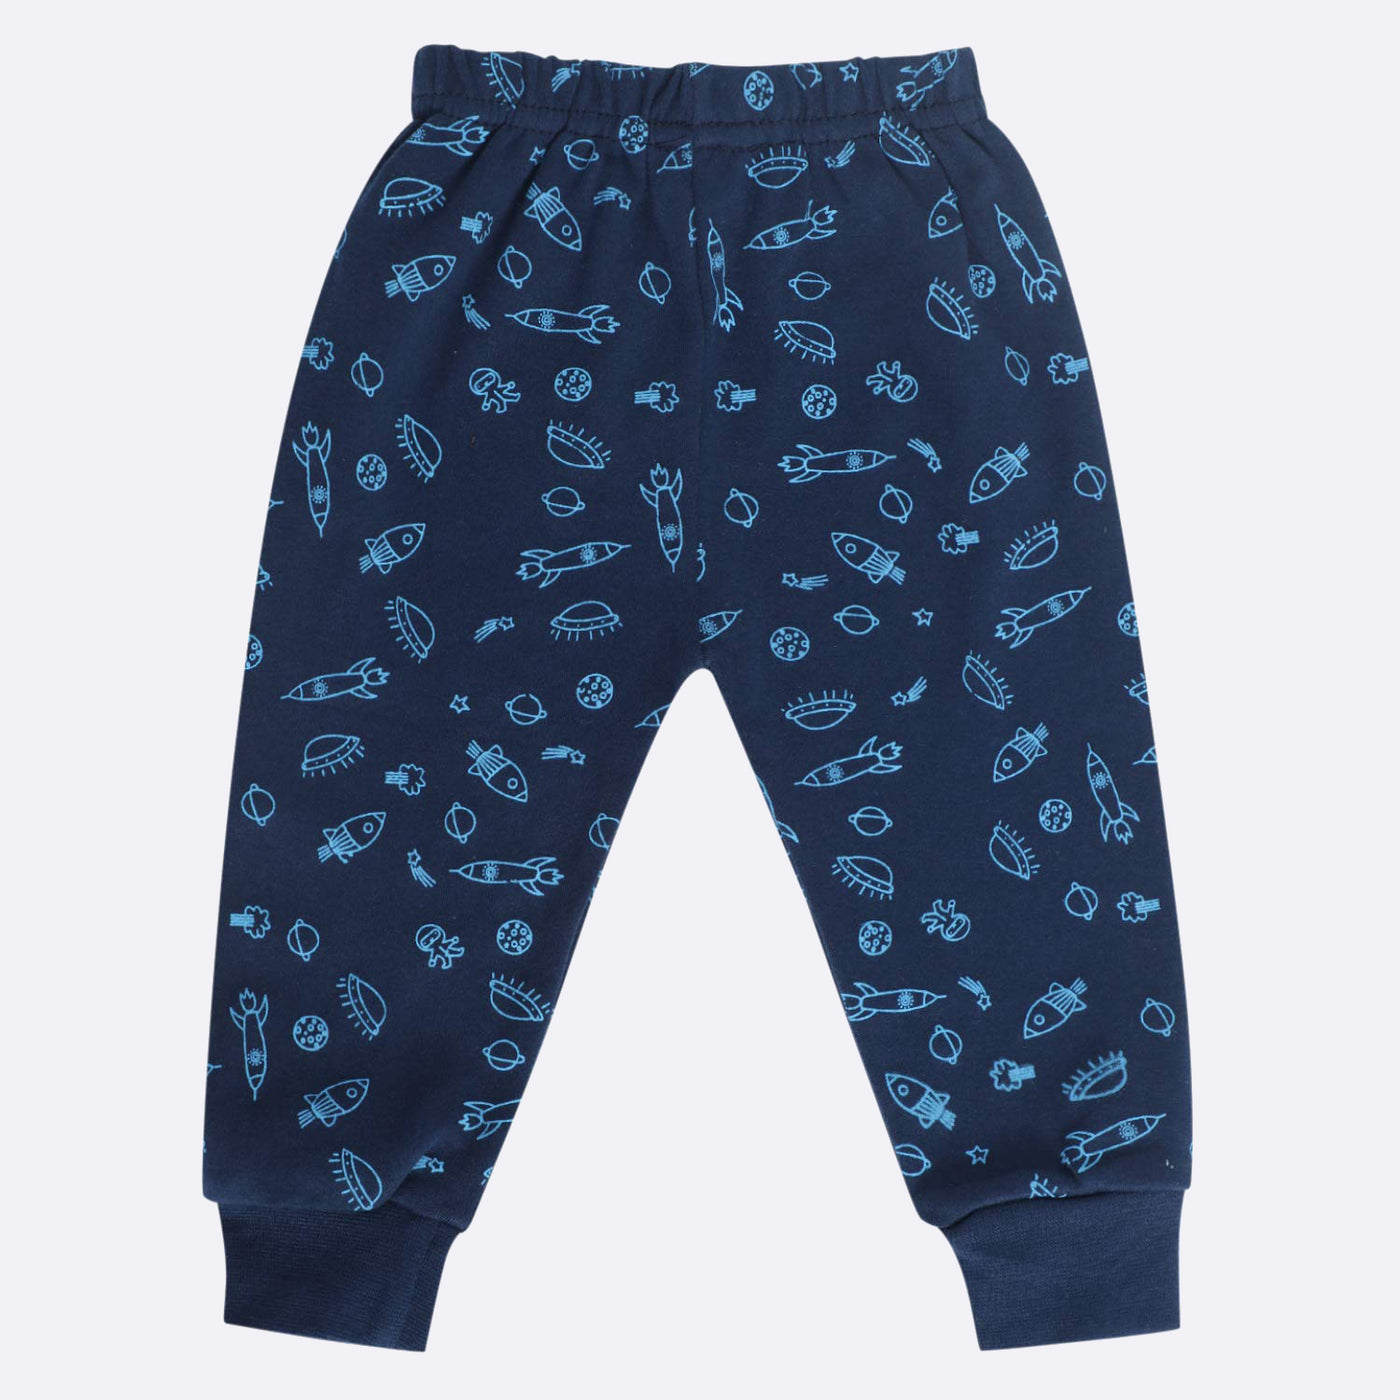 Feather Soft Dark Color Unisex Pyjama (Blue, Pack of 1)